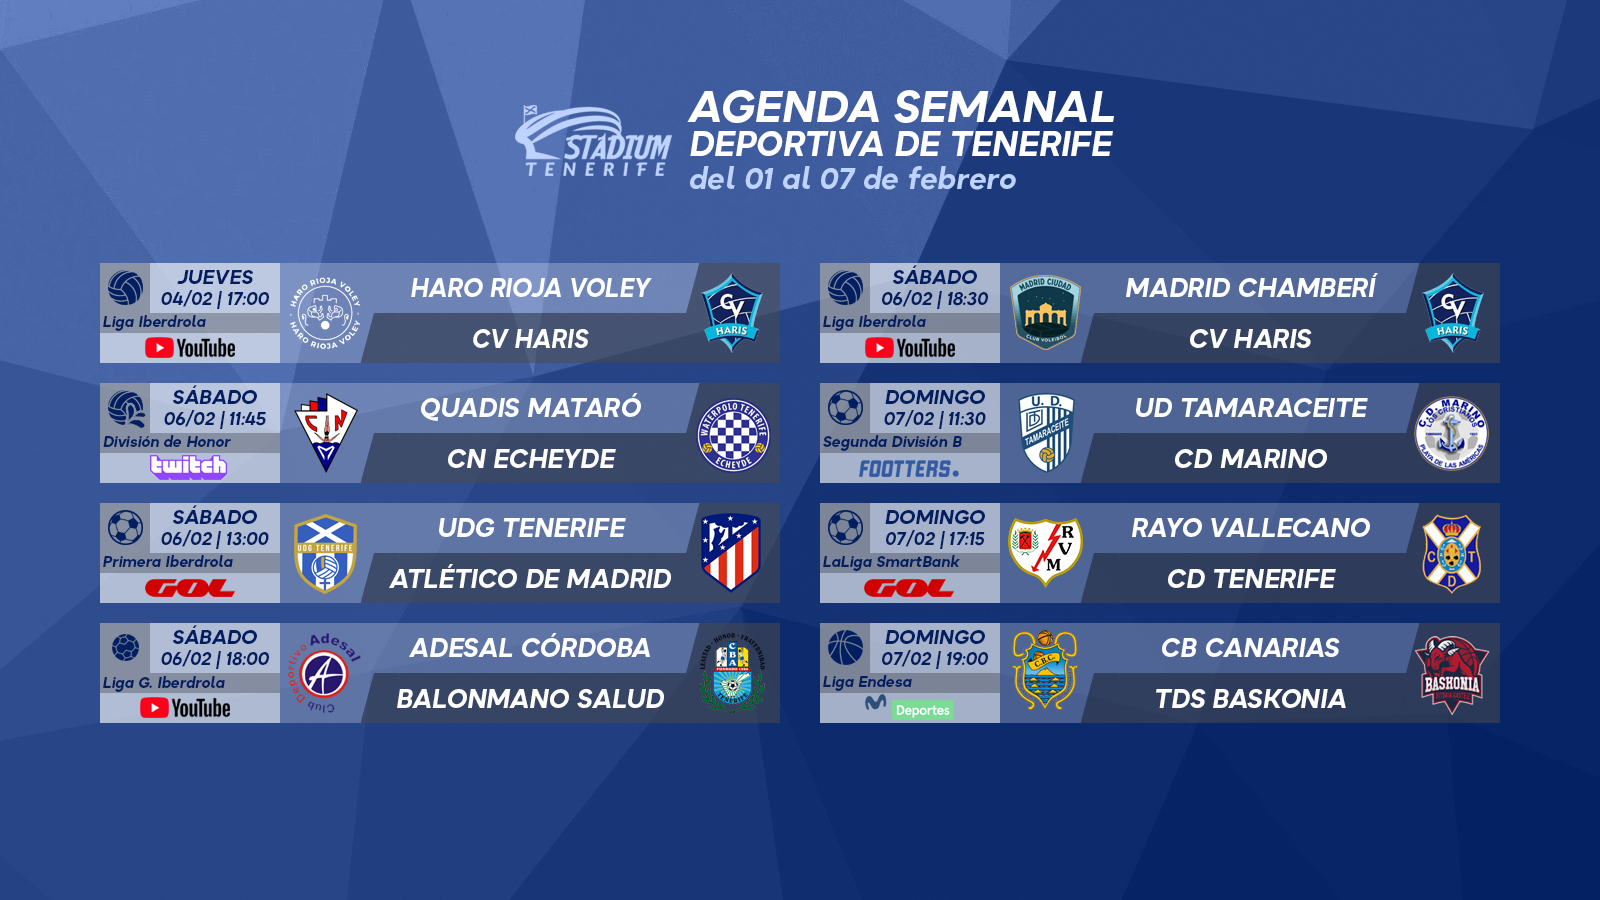 Agenda Semanal Deportiva de Tenerife (1 al 7 de febrero)